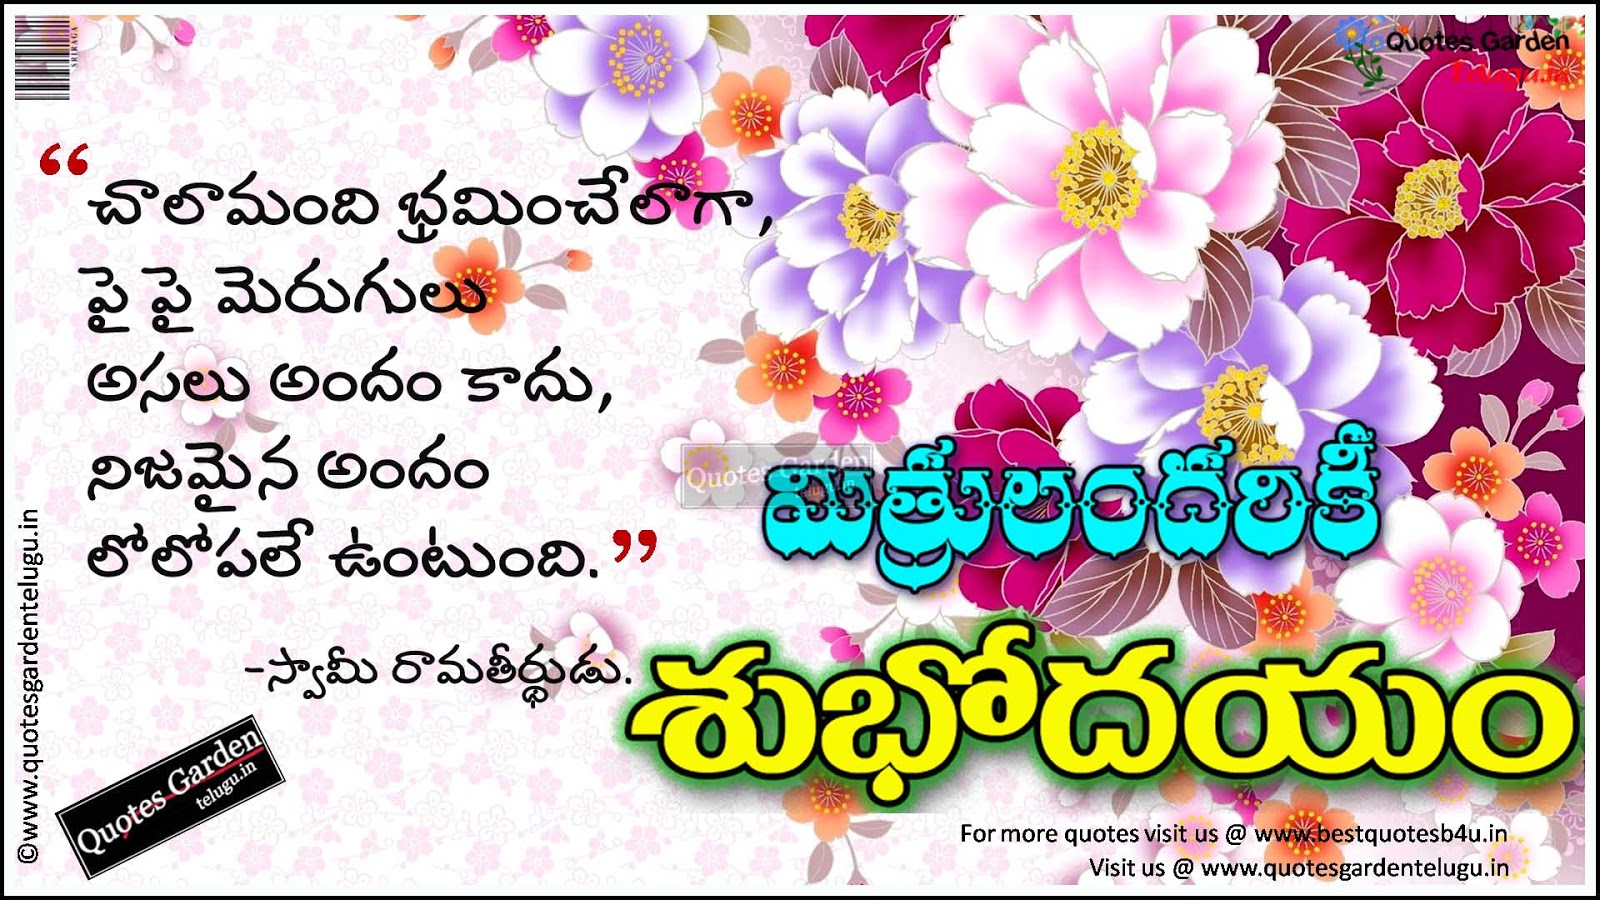 Telugu manchimatalu with shubhodayam greetings | QUOTES GARDEN TELUGU ...